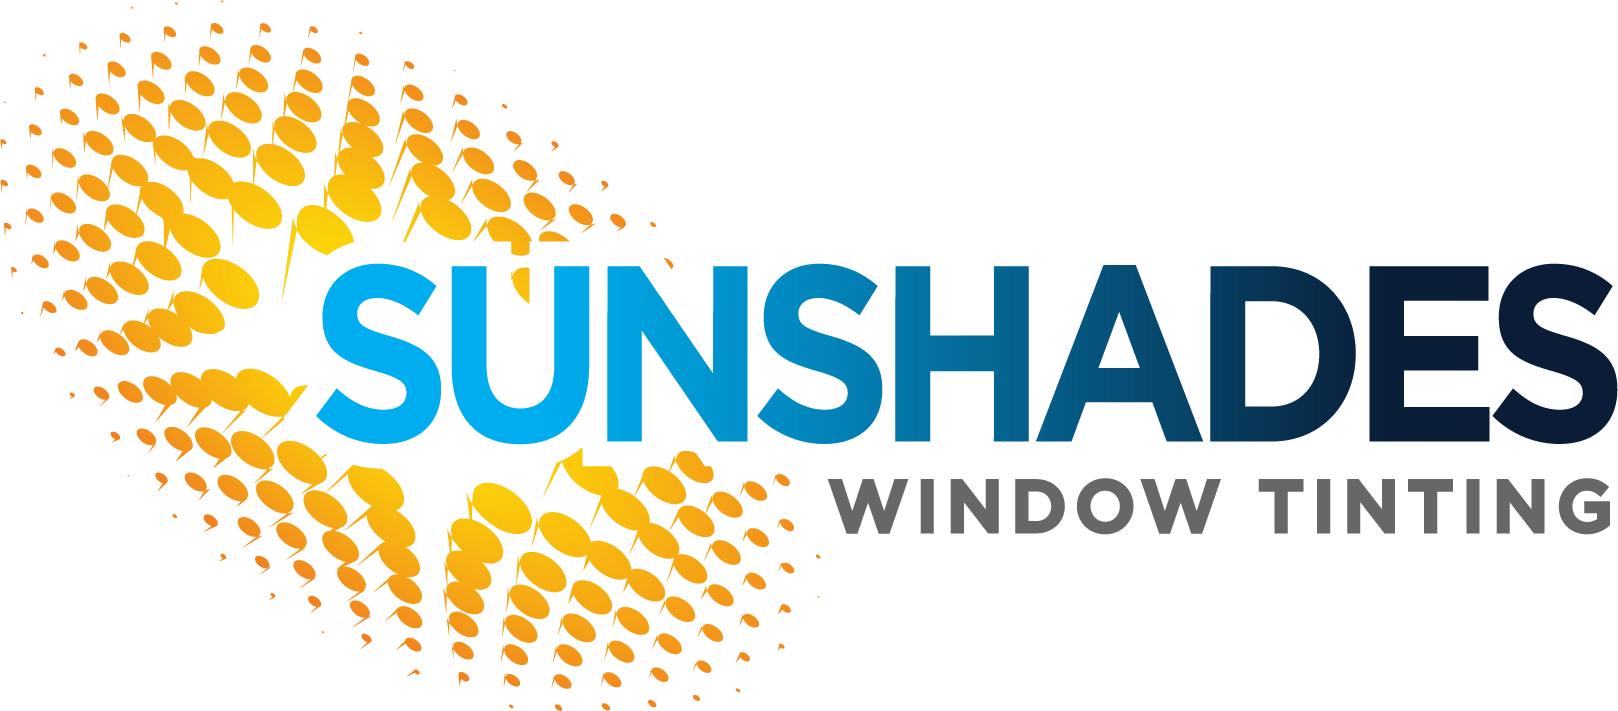 Sunshades Window Tinting Inc logo